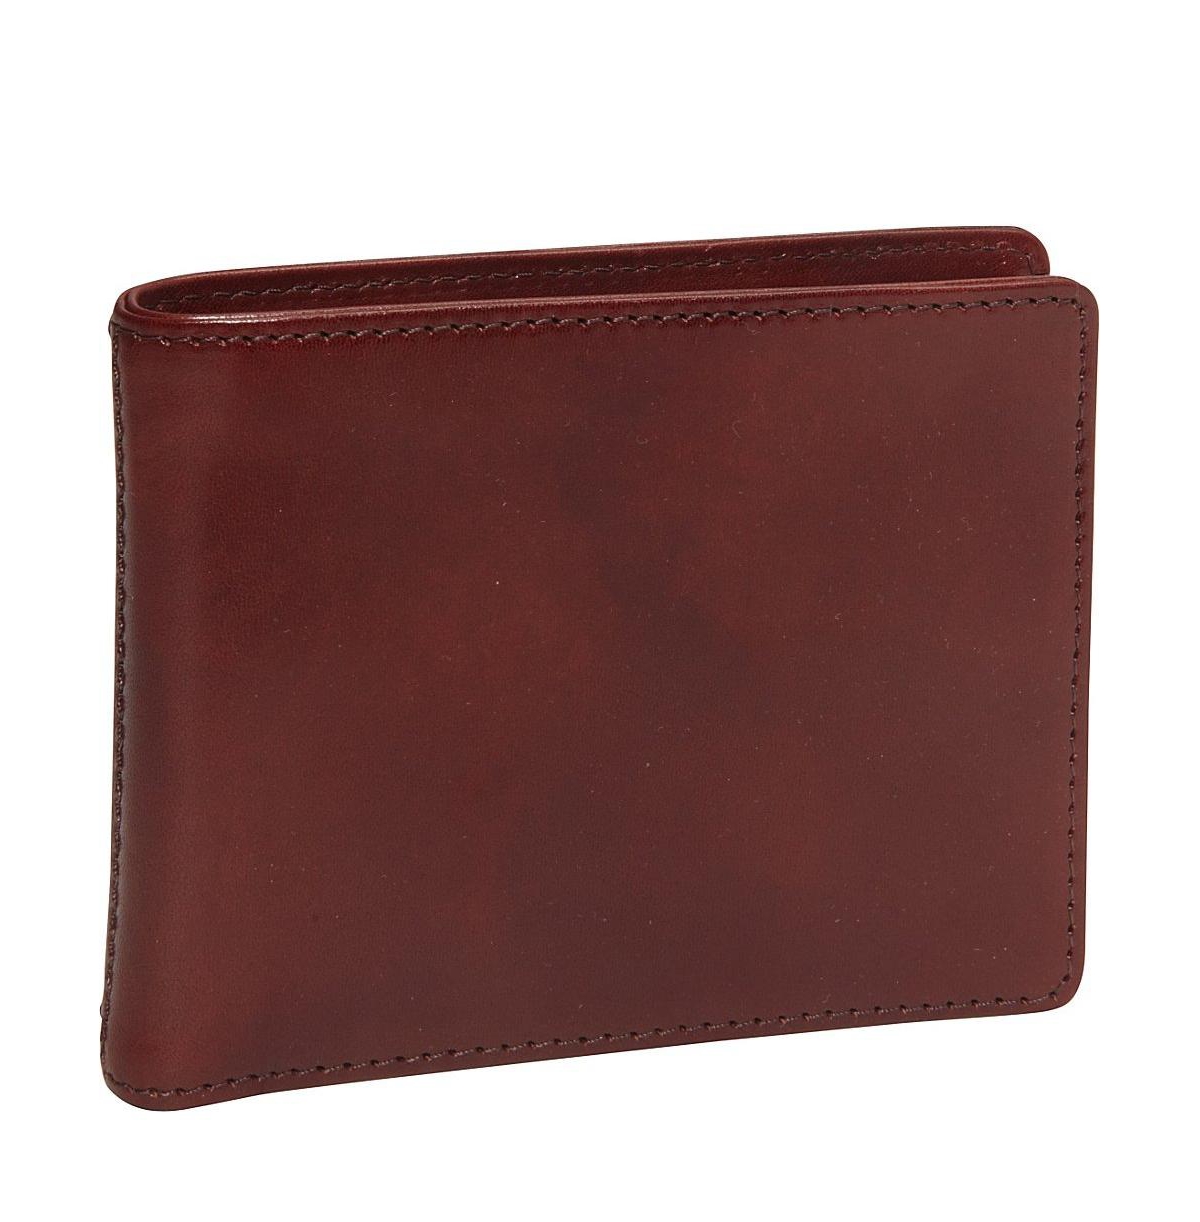 Men's Executive Wallet in Old Leather - Rfid - Dark brown